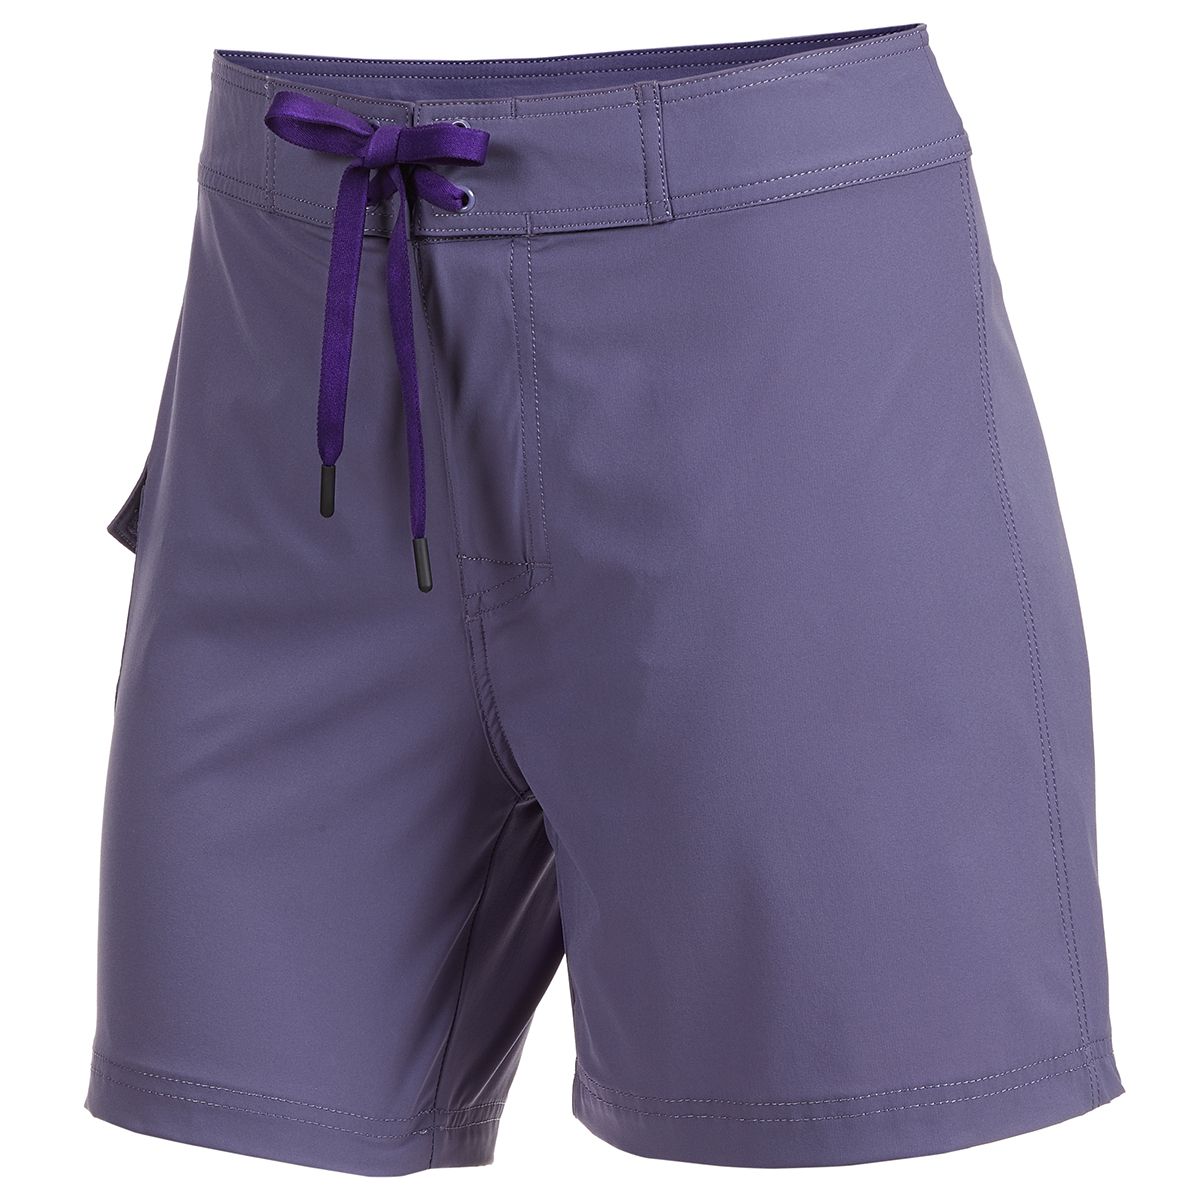 Ems Women's Hull Short - Purple, XS